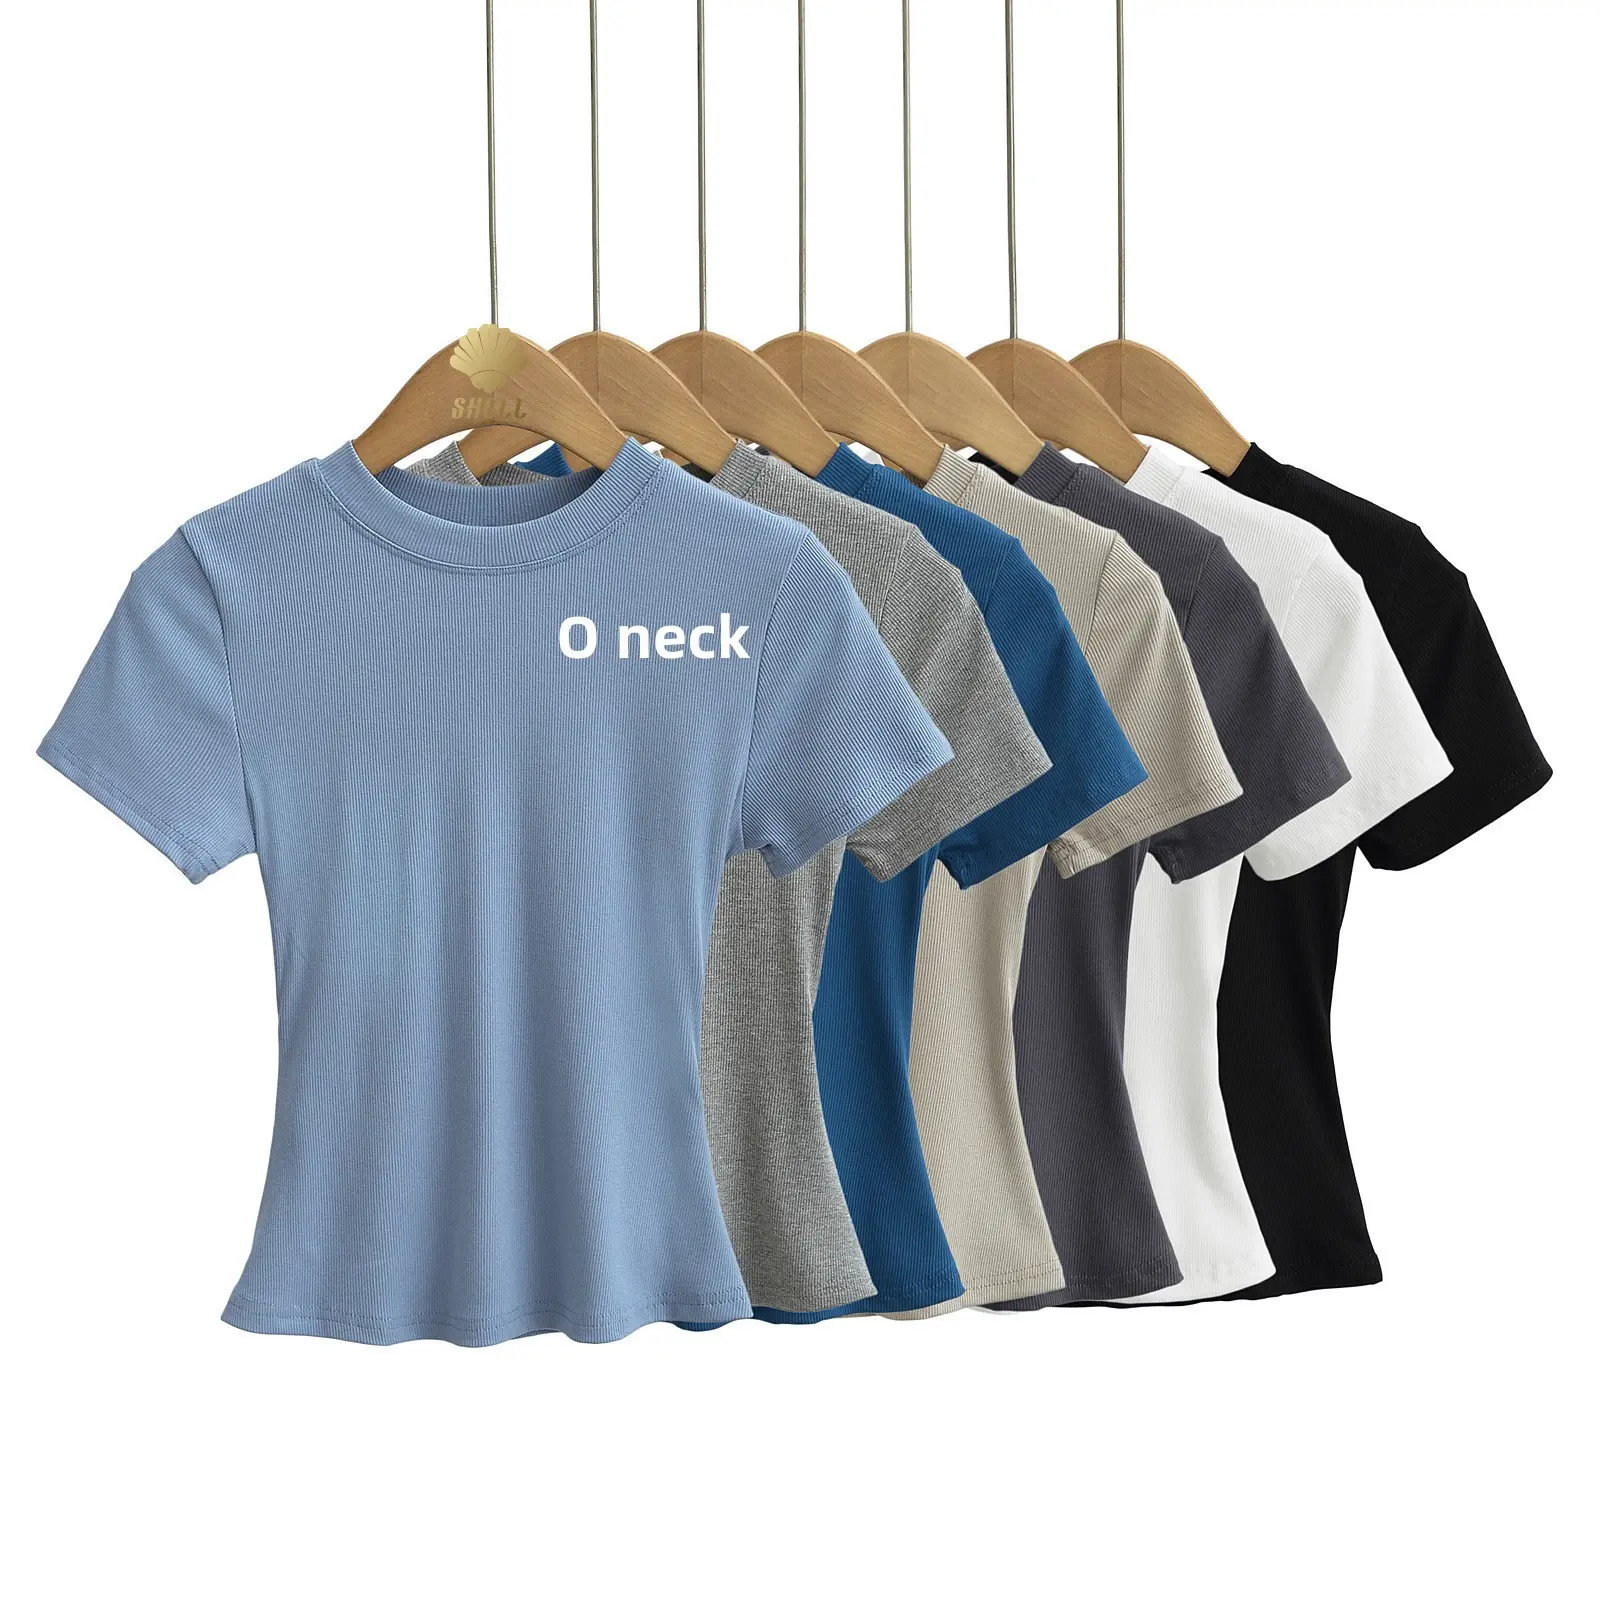 CNSHELL 슬림 하의 여성용 봄과 여름 타이트 A 피스 티셔츠 반소매 라운드 넥 슬리밍 단색 탑